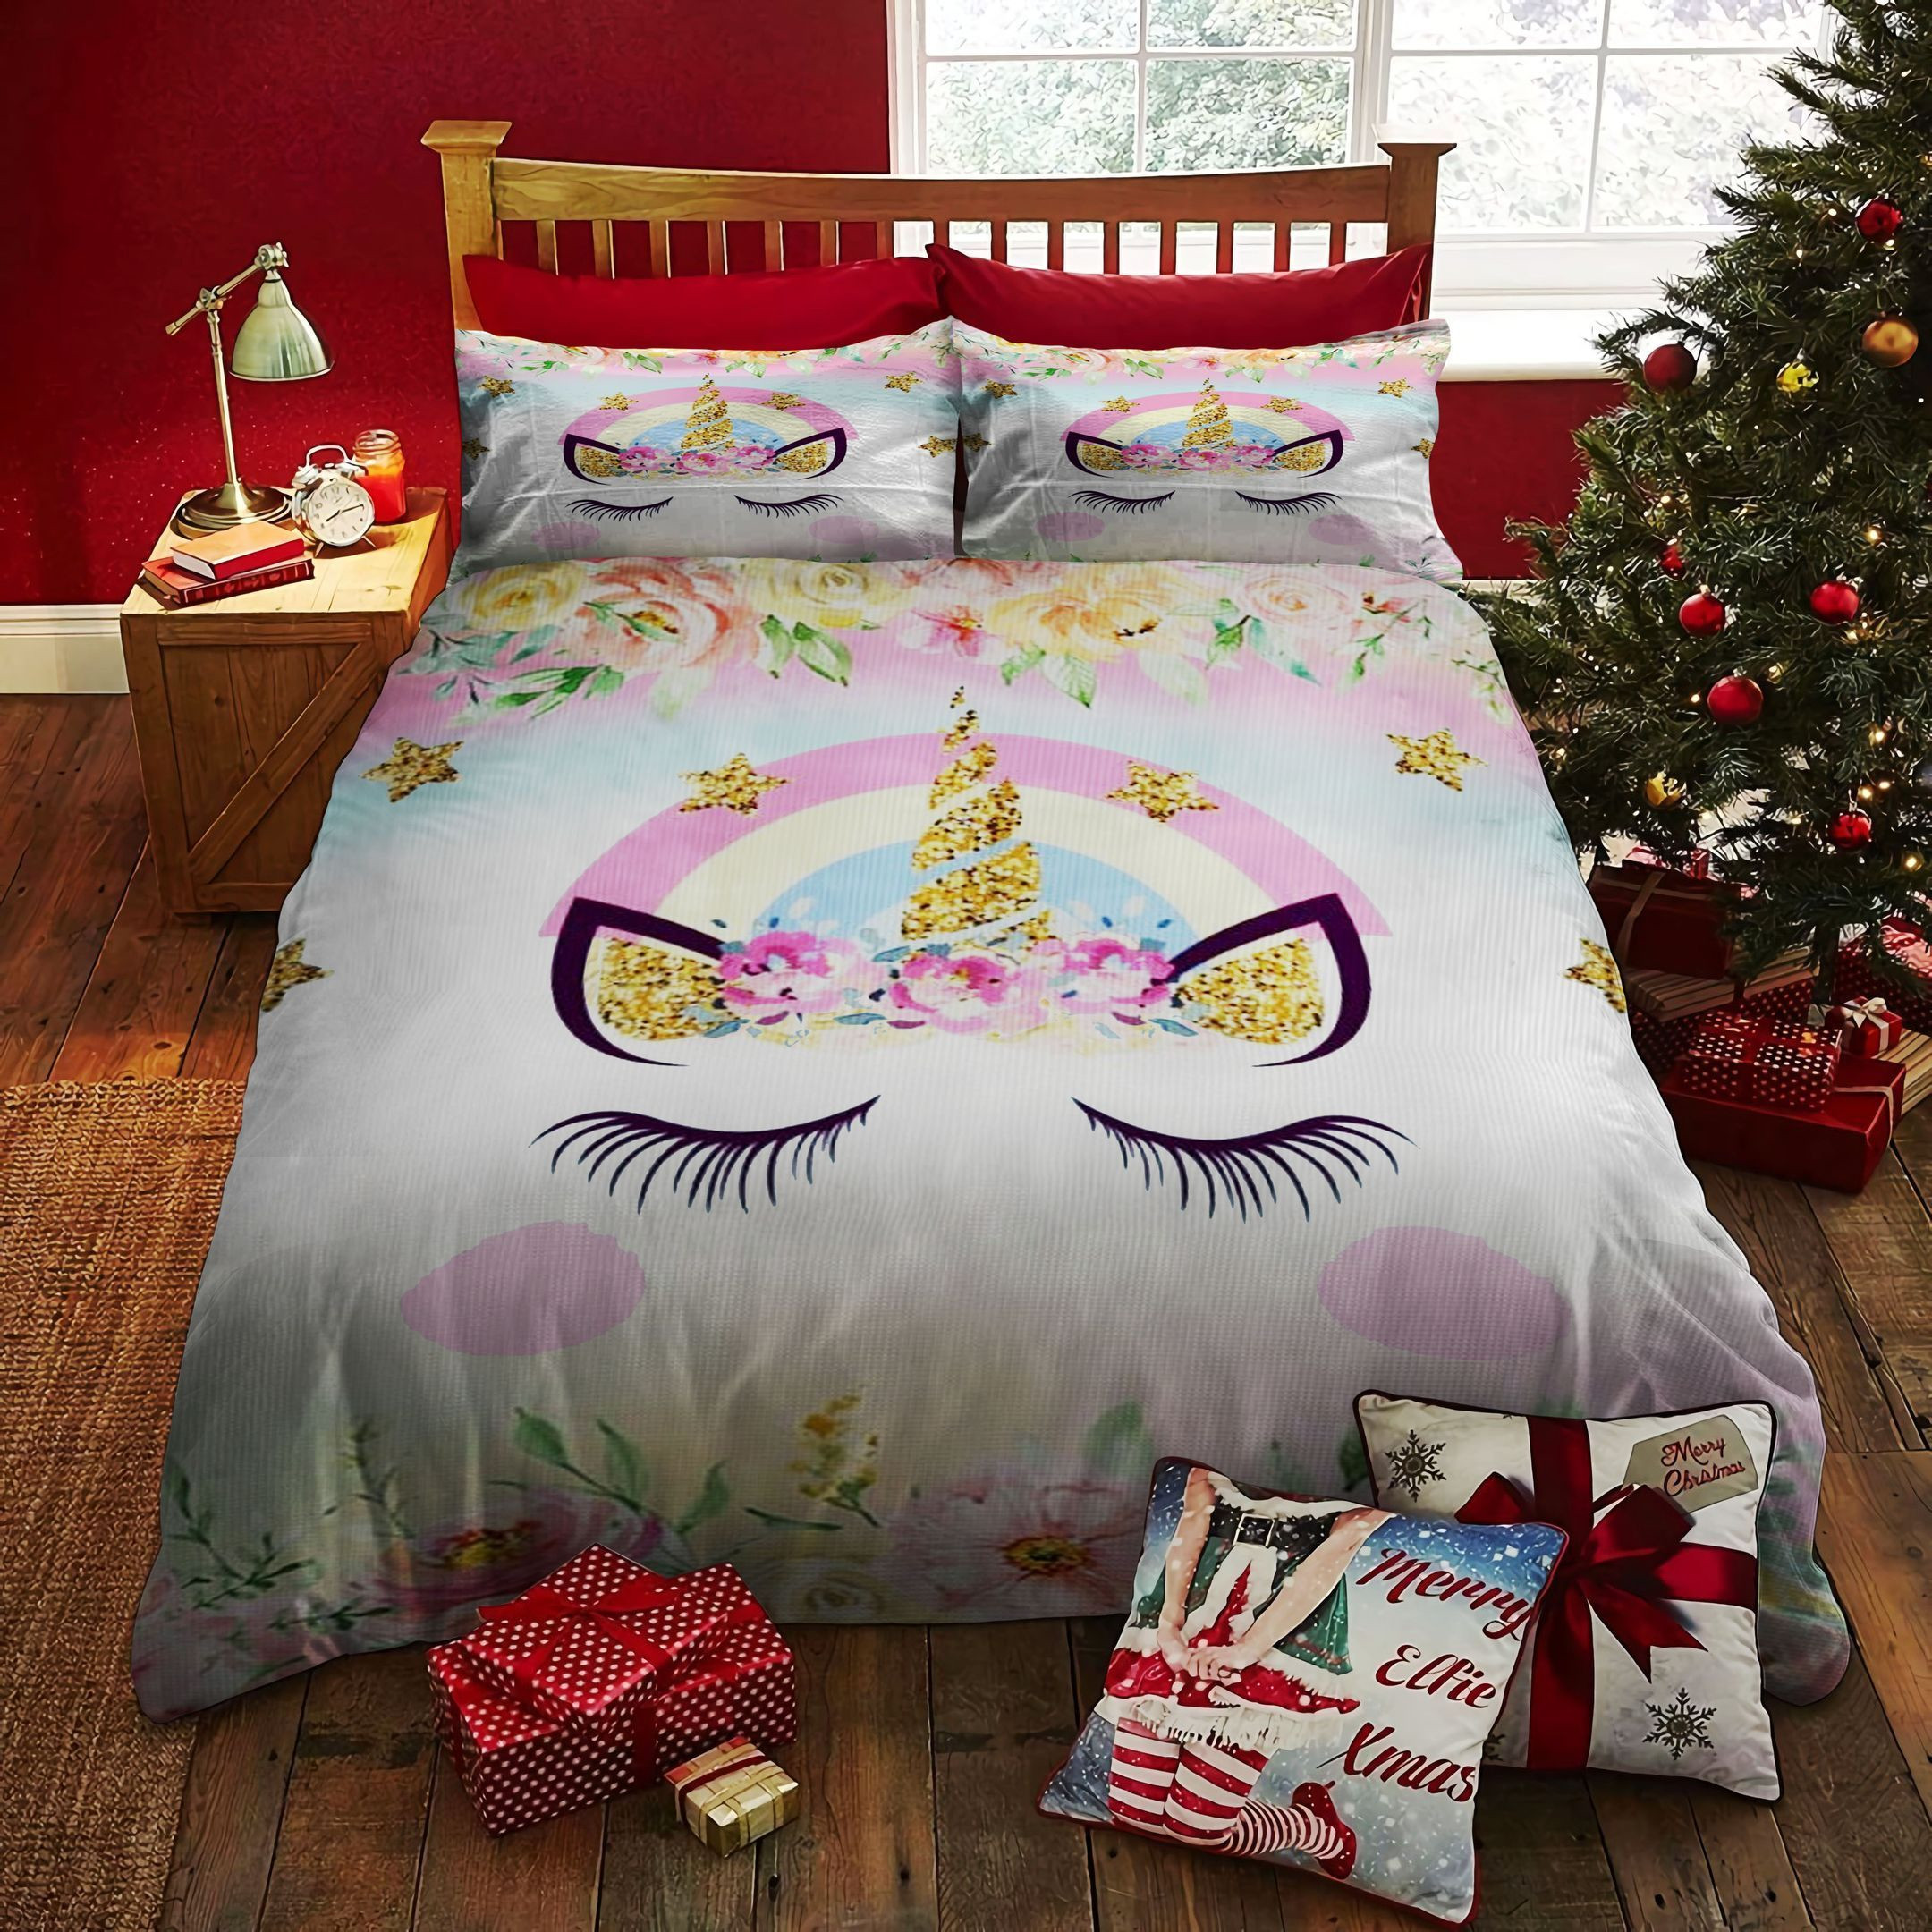 unicorn bed sheets set duvet cover bedding collection mqlsj